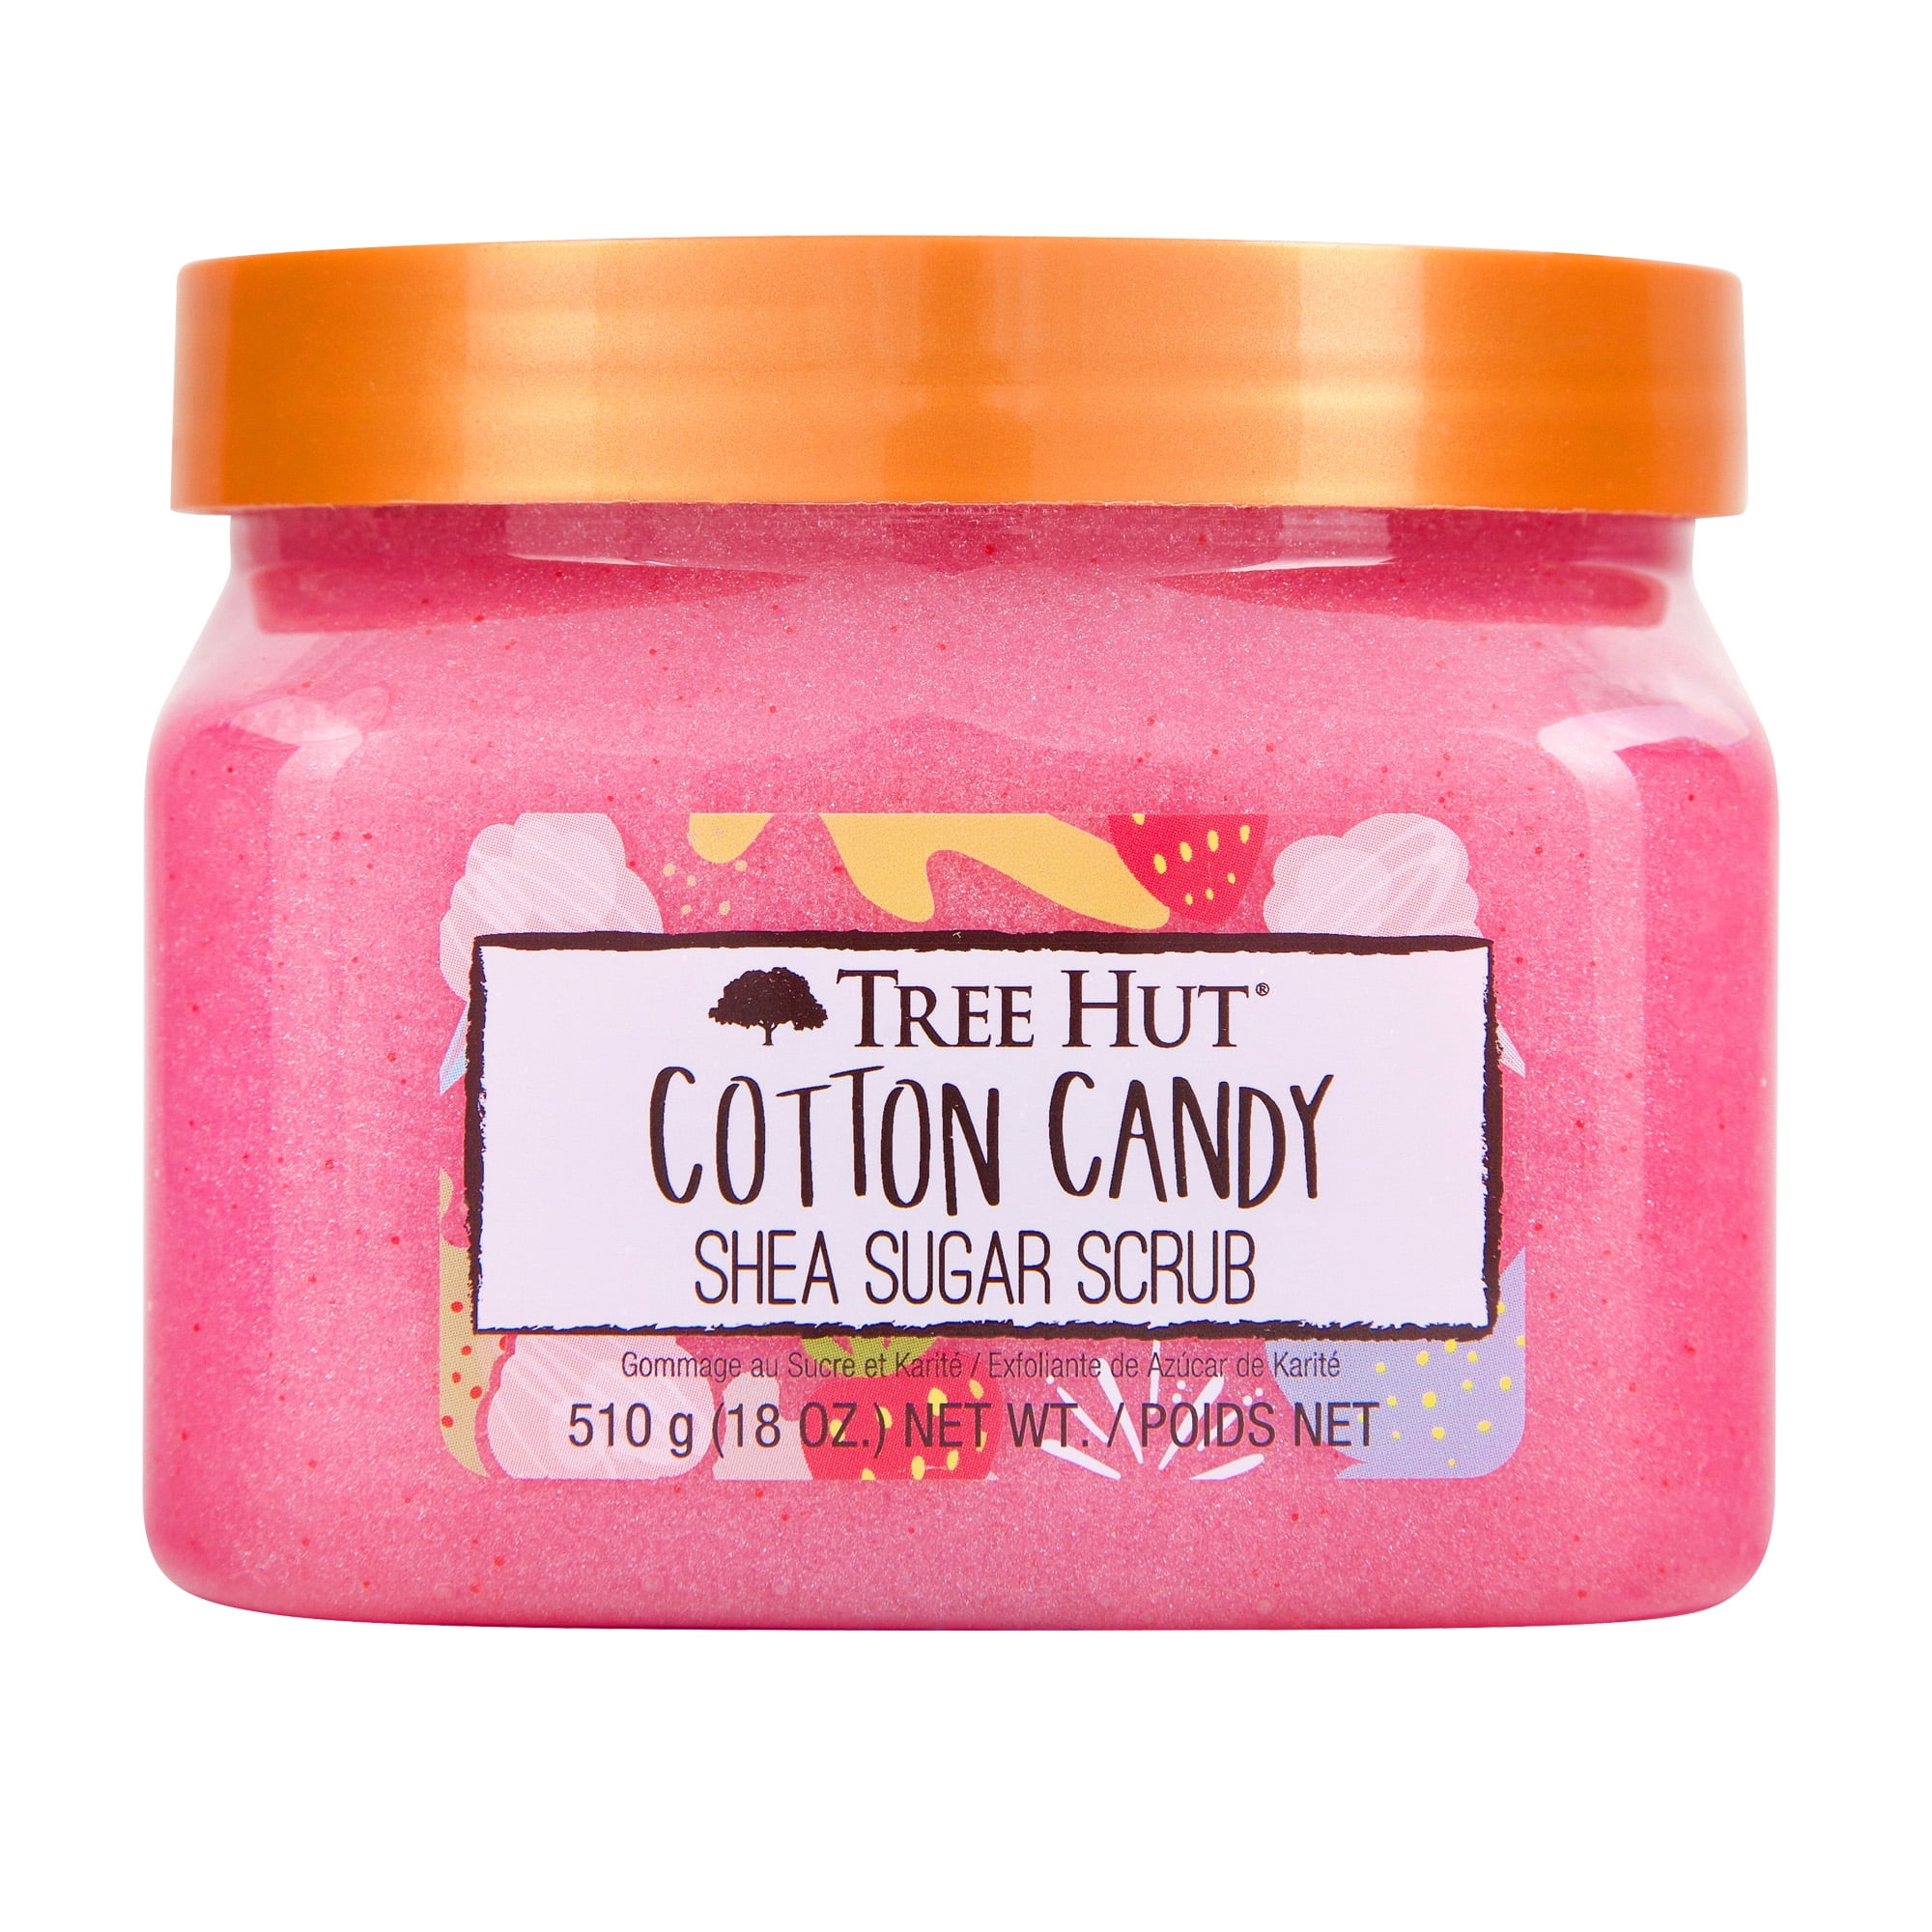 Tree Hut Cotton Candy Shea Sugar Exfoliating and Hydrating Body Scrub